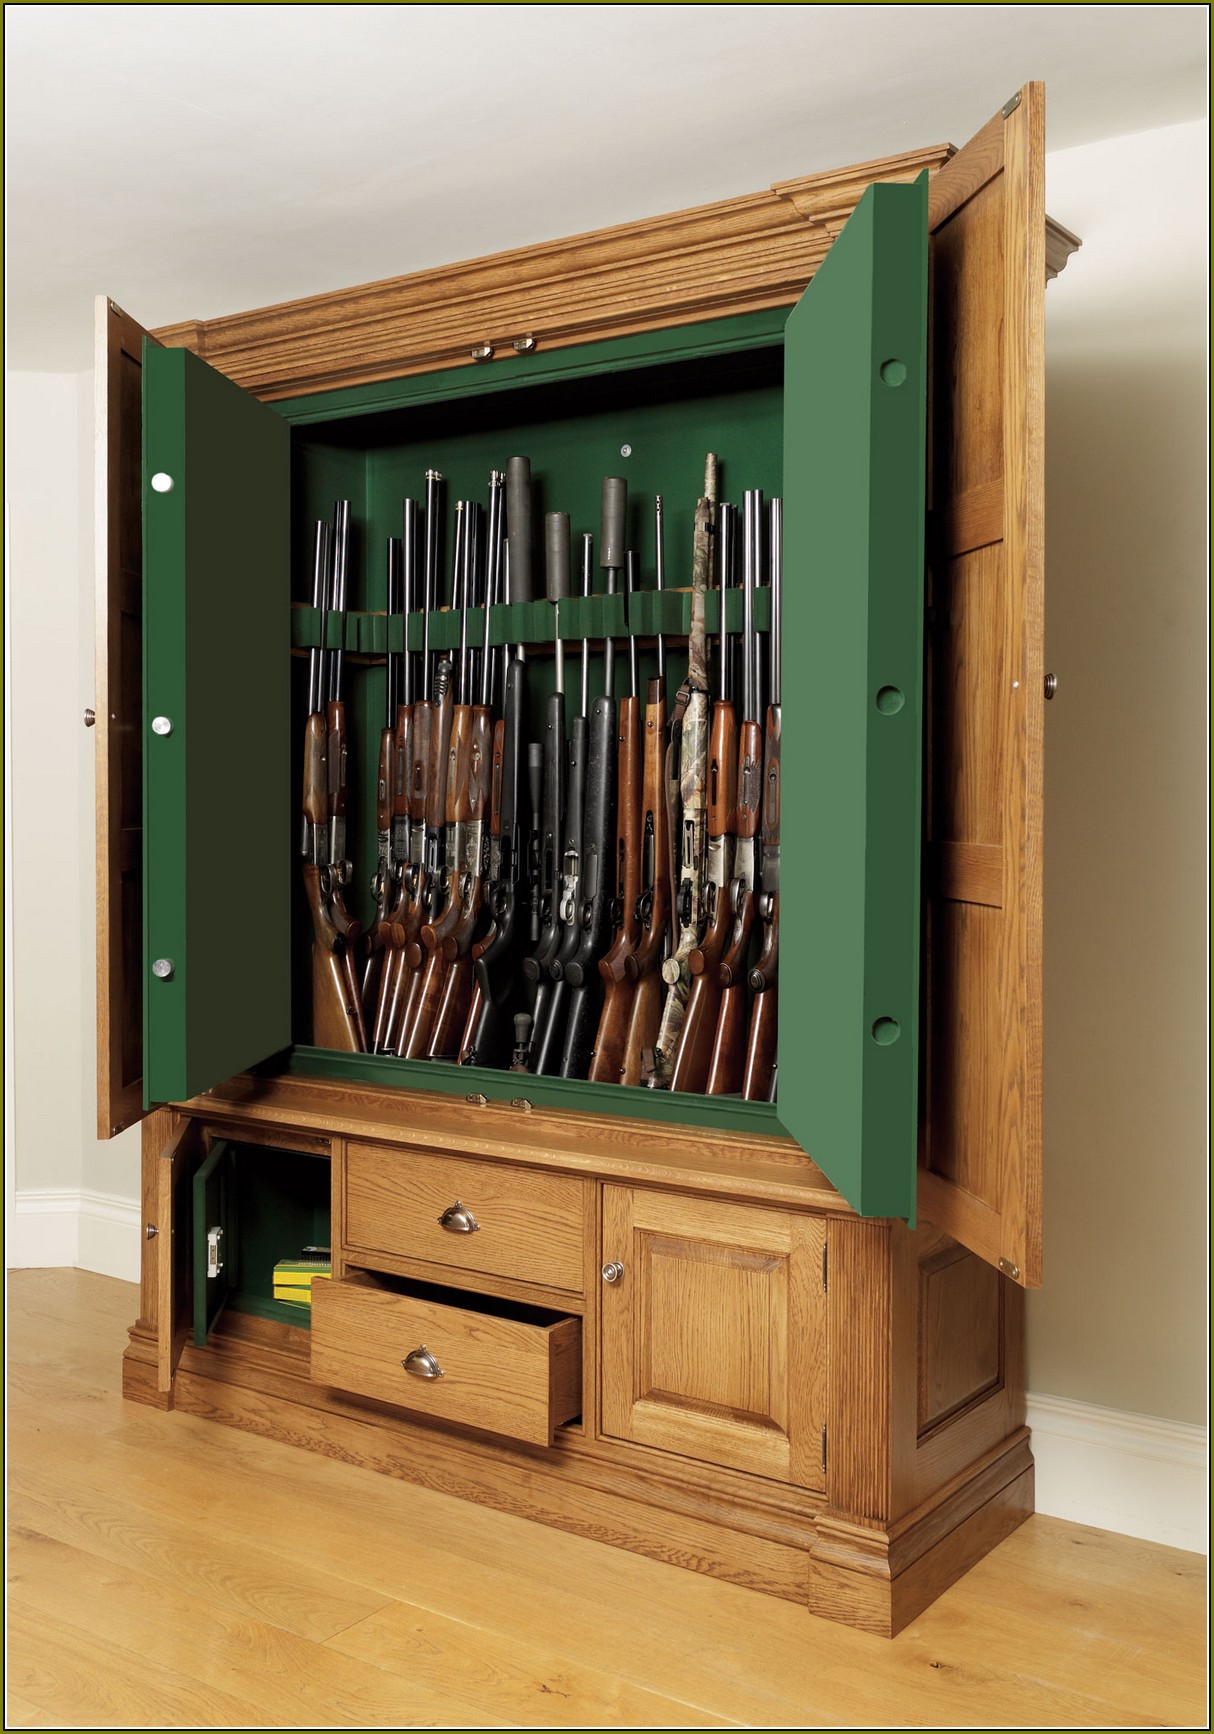 Wooden Gun Cabinets At Walmart